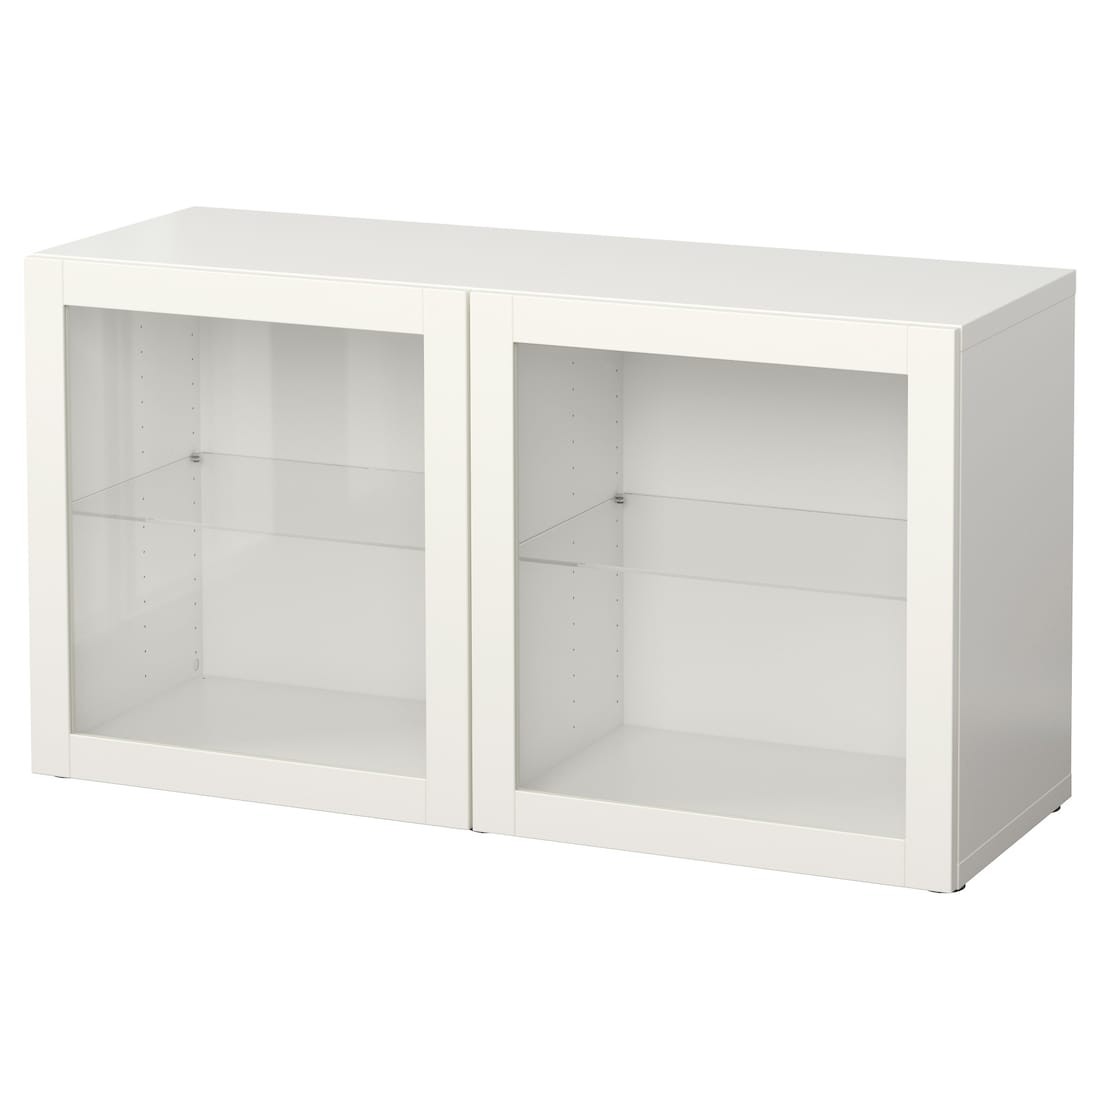 IKEA BESTÅ БЕСТО Шкаф-витрина, белый / Sindvik белое стекло прозрачное, 120x40x64 см 89047669 890.476.69